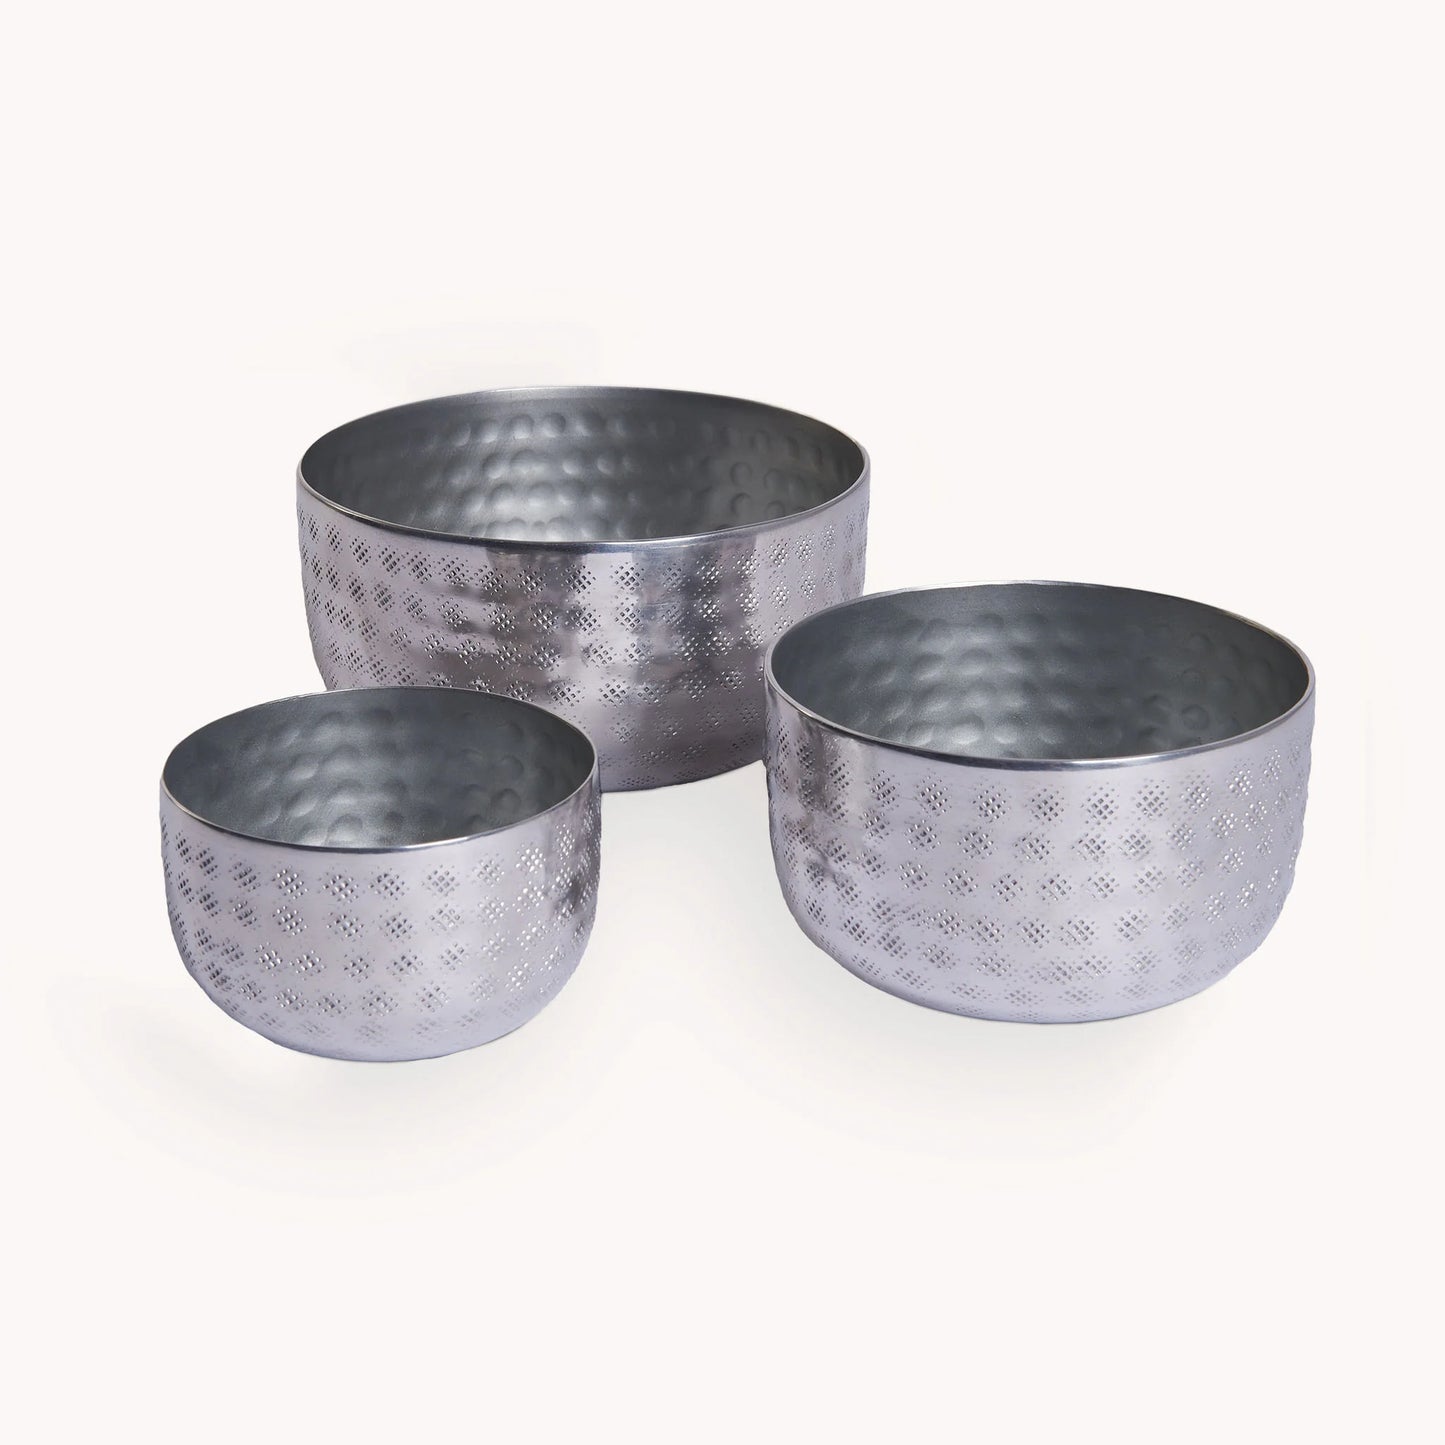 Hammered Bowl - Set of 3 - Silver